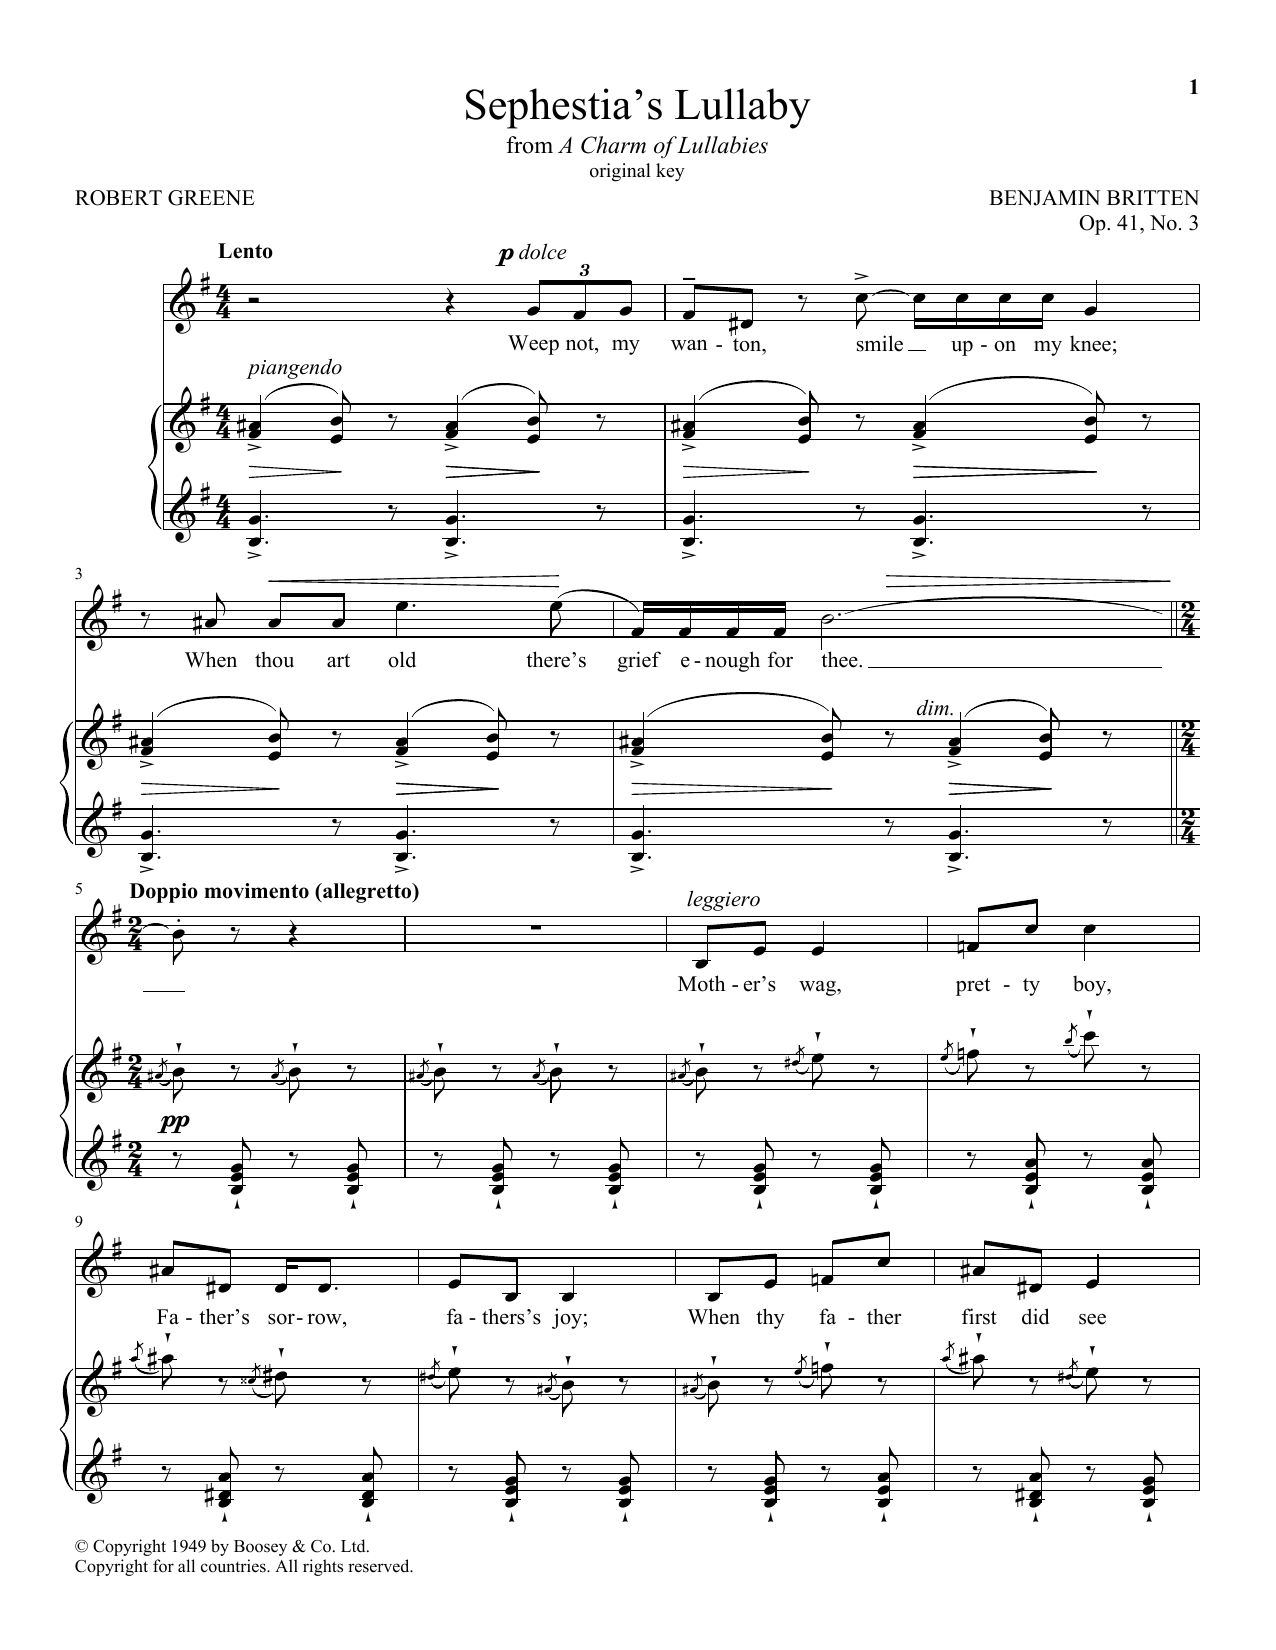 Download Benjamin Britten Sephestia's Lullaby Sheet Music